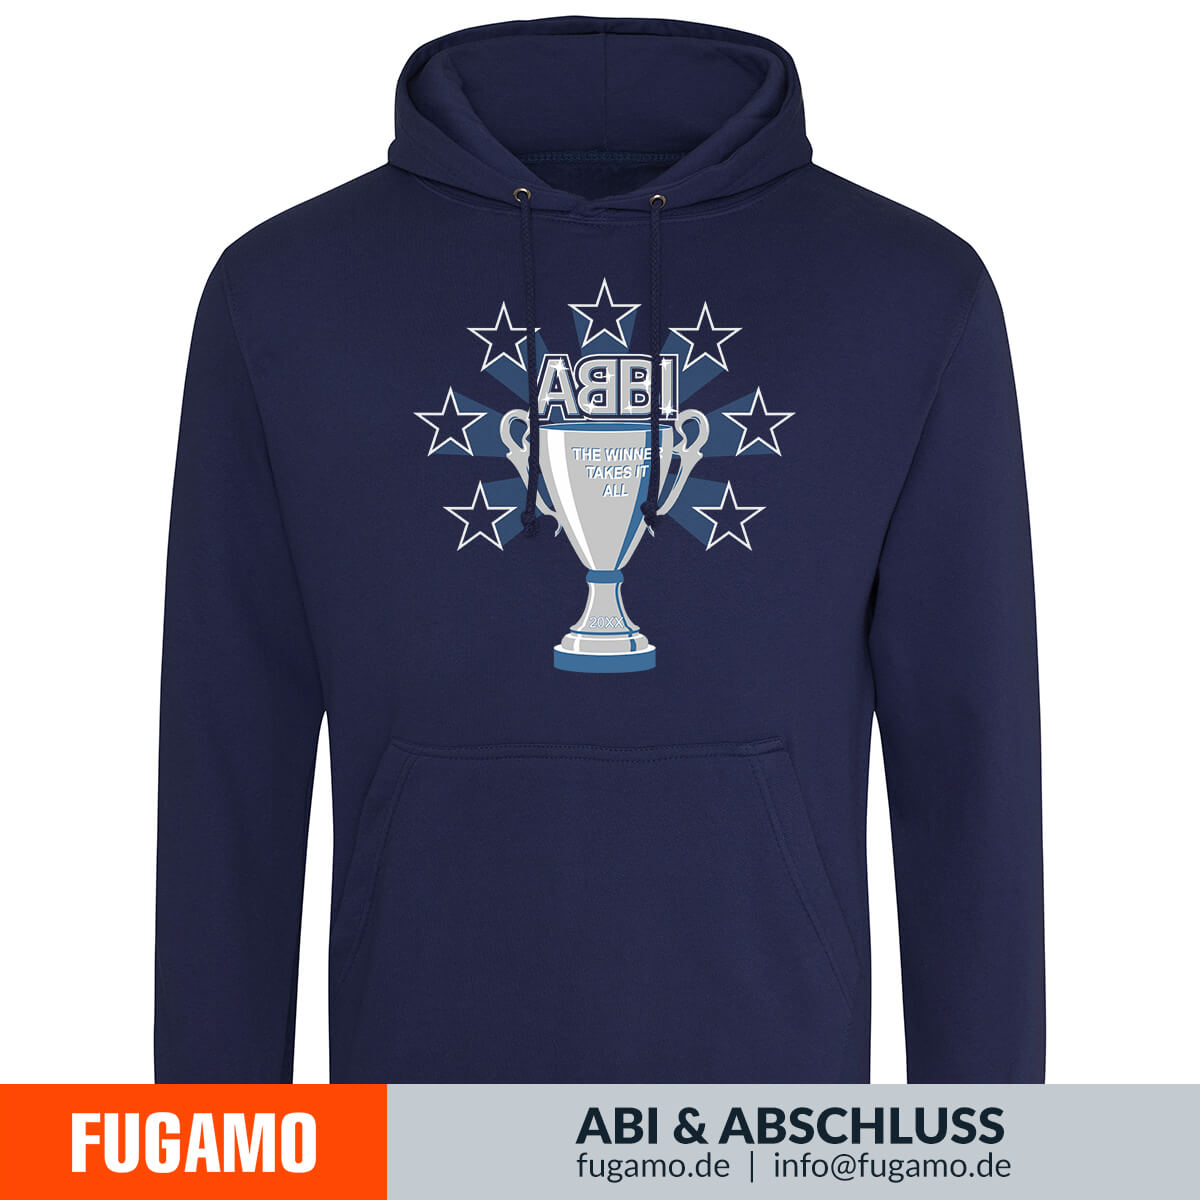 ABBI - The winner takes it all